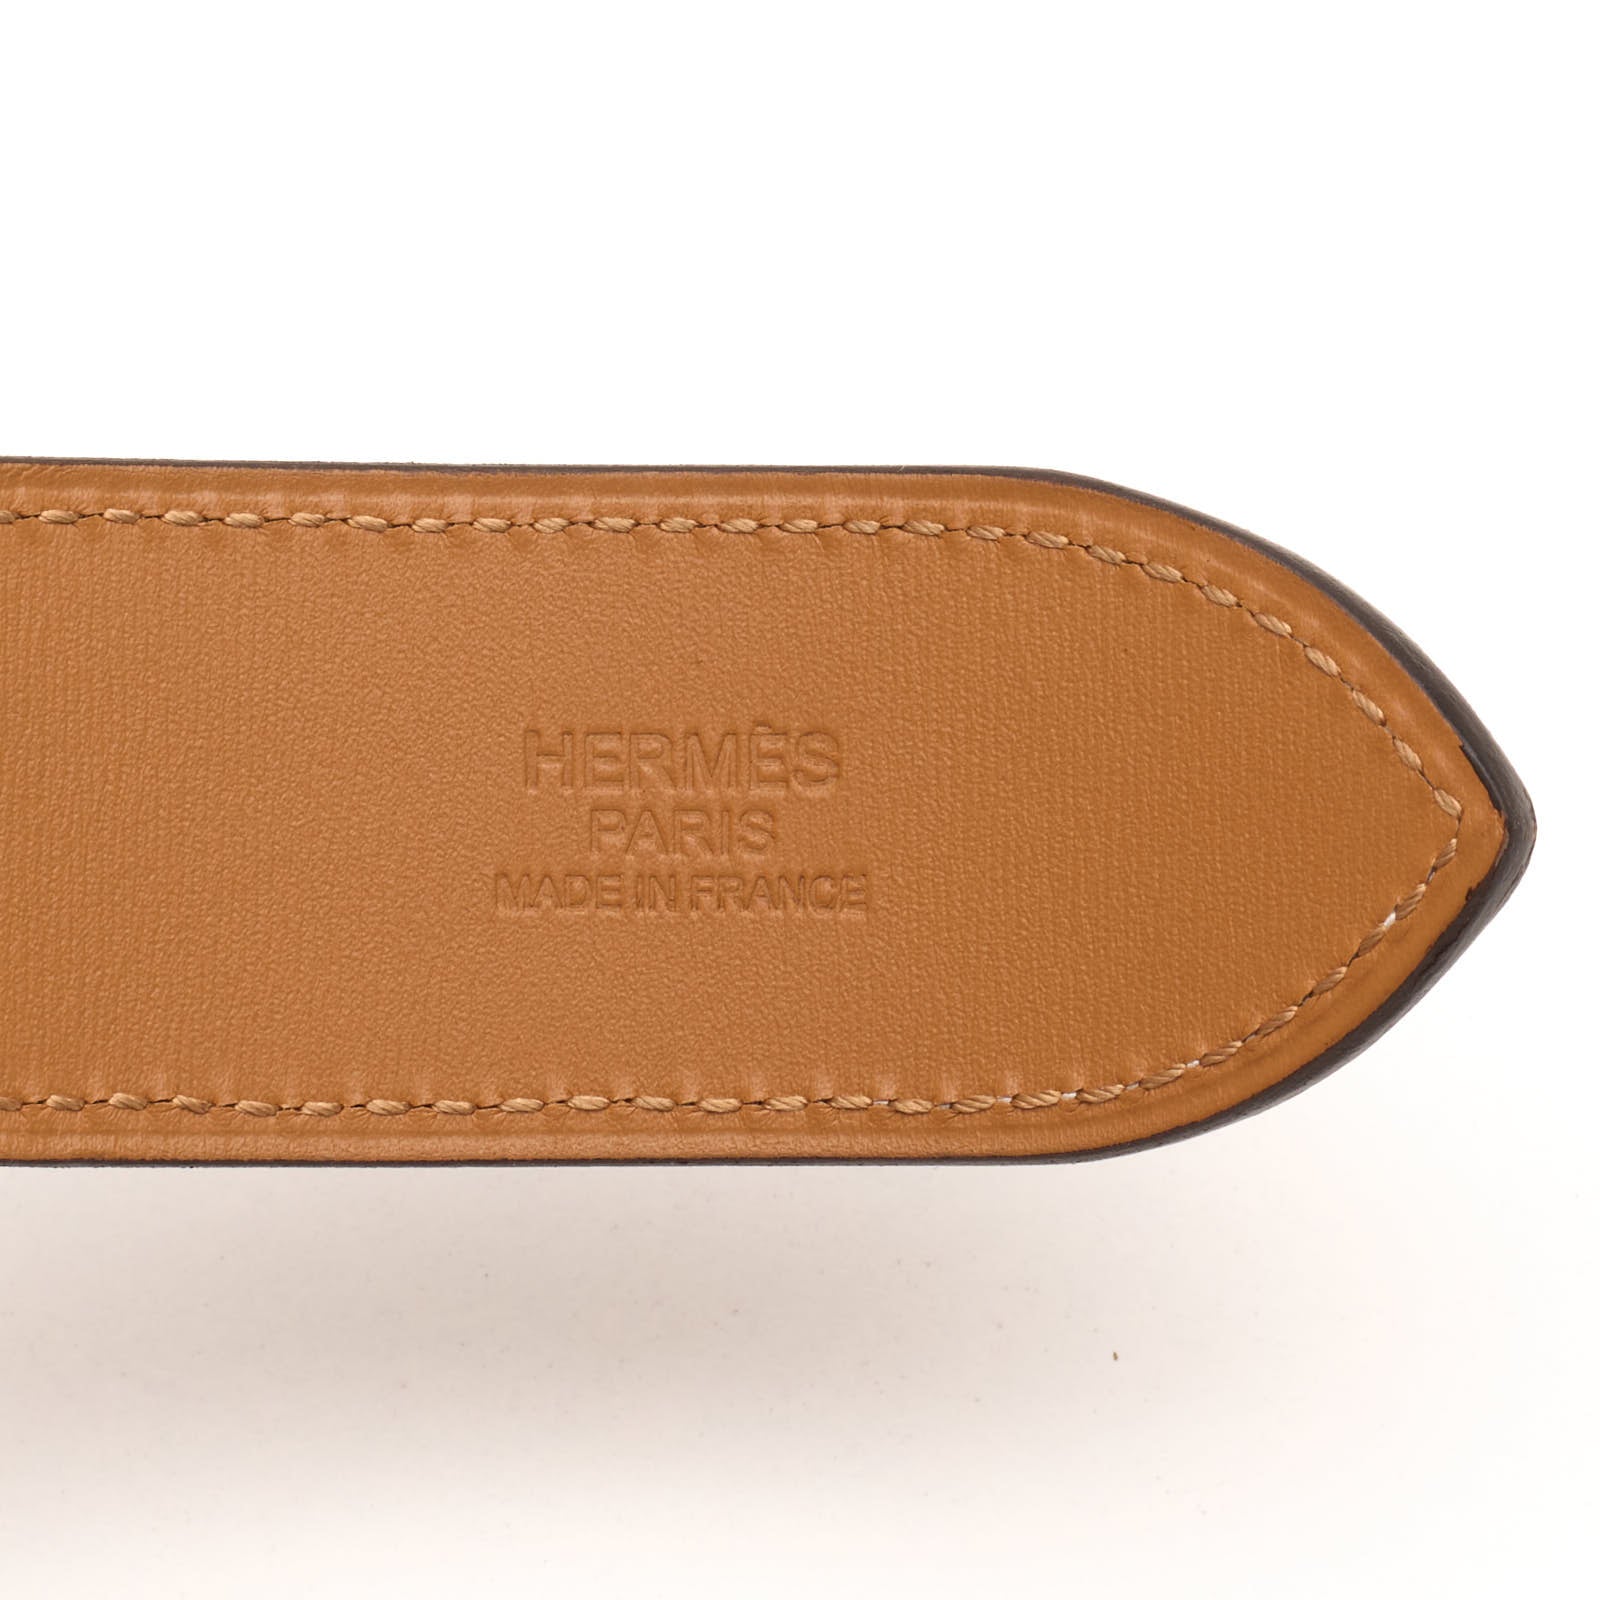 HERMES Paris Etriviere 32 Natural Sable Clemence Leather Belt 90cm NEW 36"